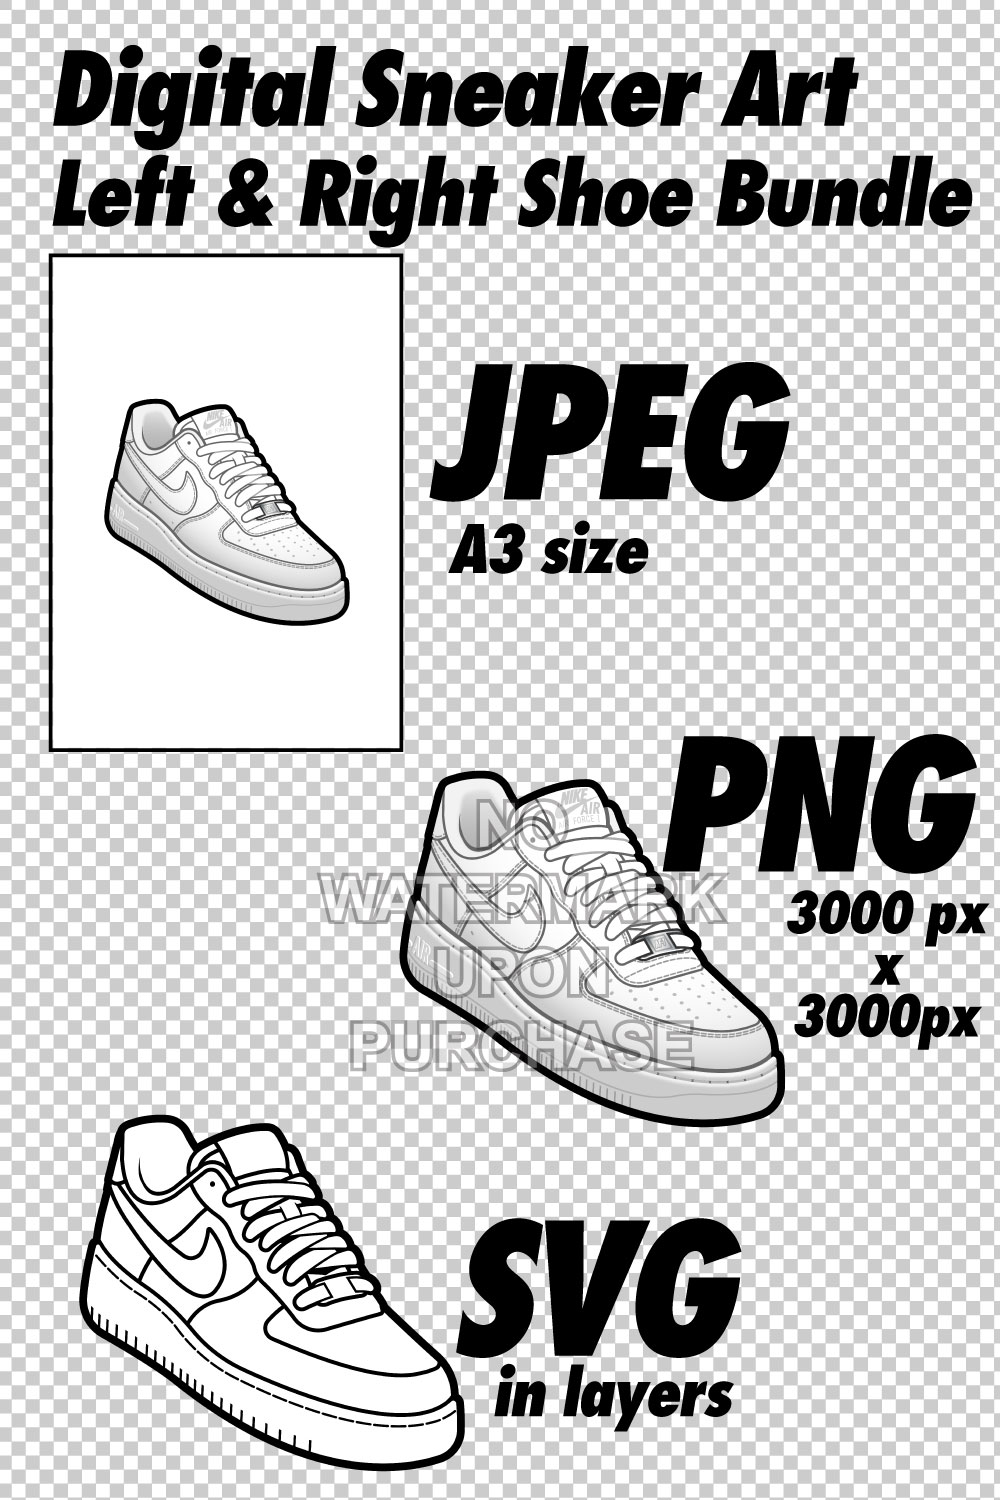 Air Force 1 Low Triple White JPEG PNG SVG right & left shoe bundle pinterest preview image.